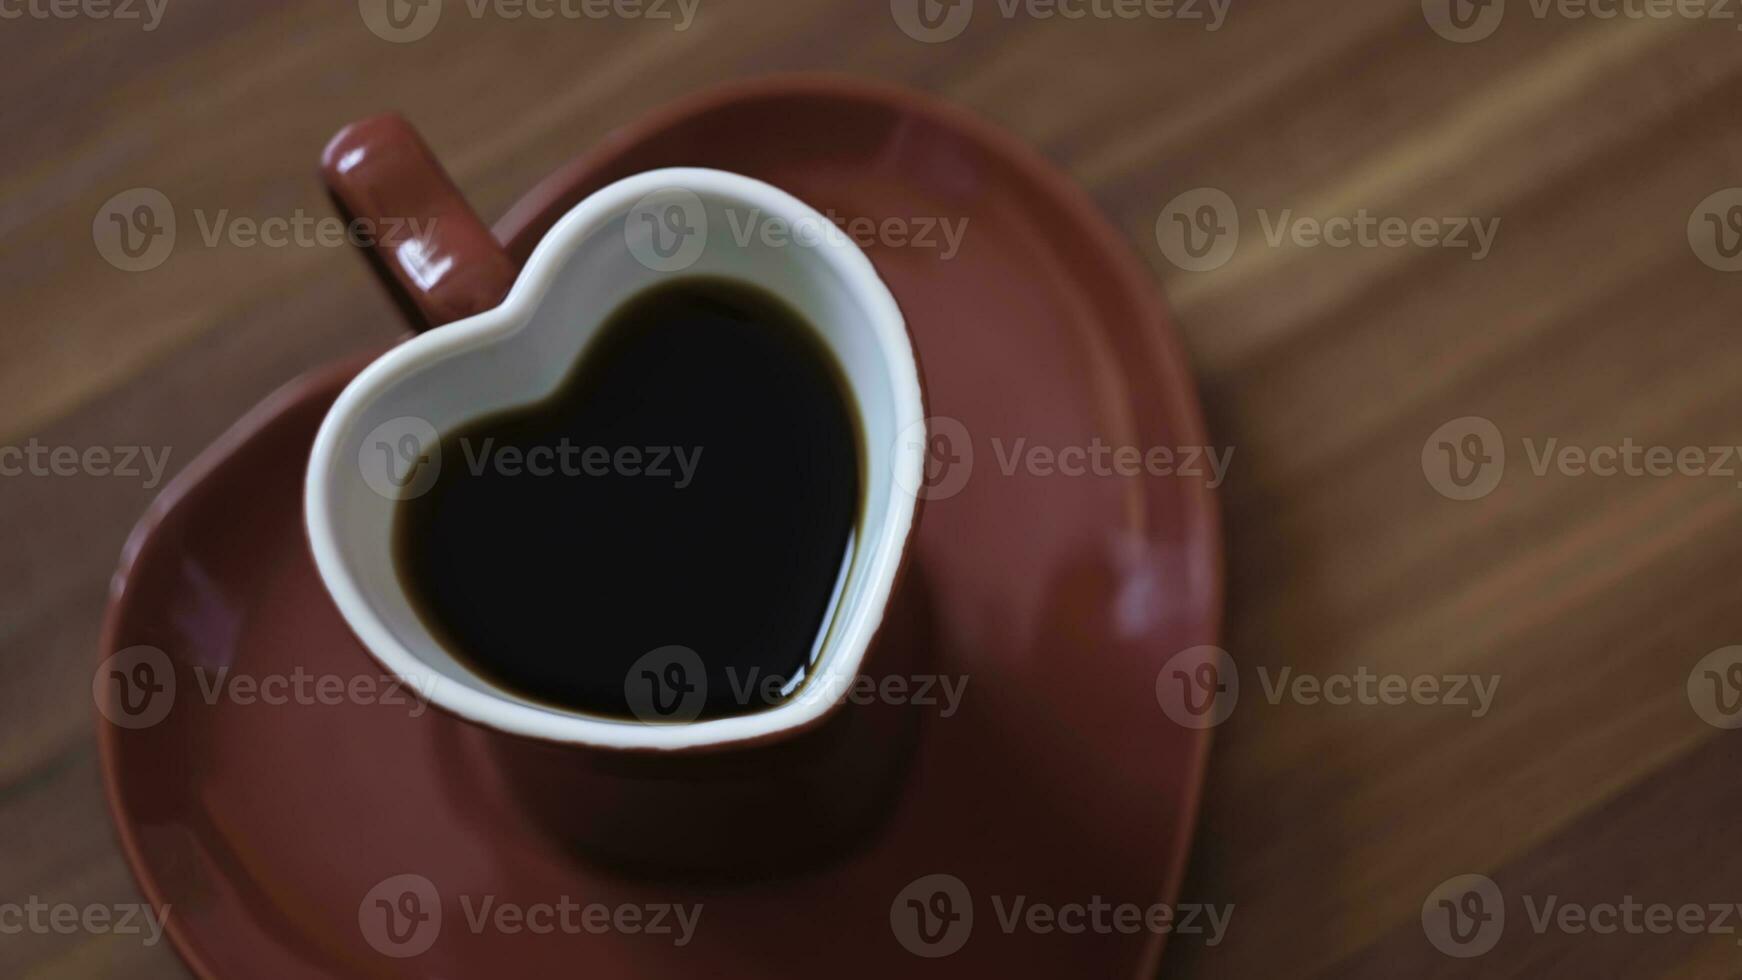 Woman made coffee in heart mug. Concept. Beautiful red heart-shaped mug with dark coffee. Romantic heart-shaped mug with coffee on romantic day photo